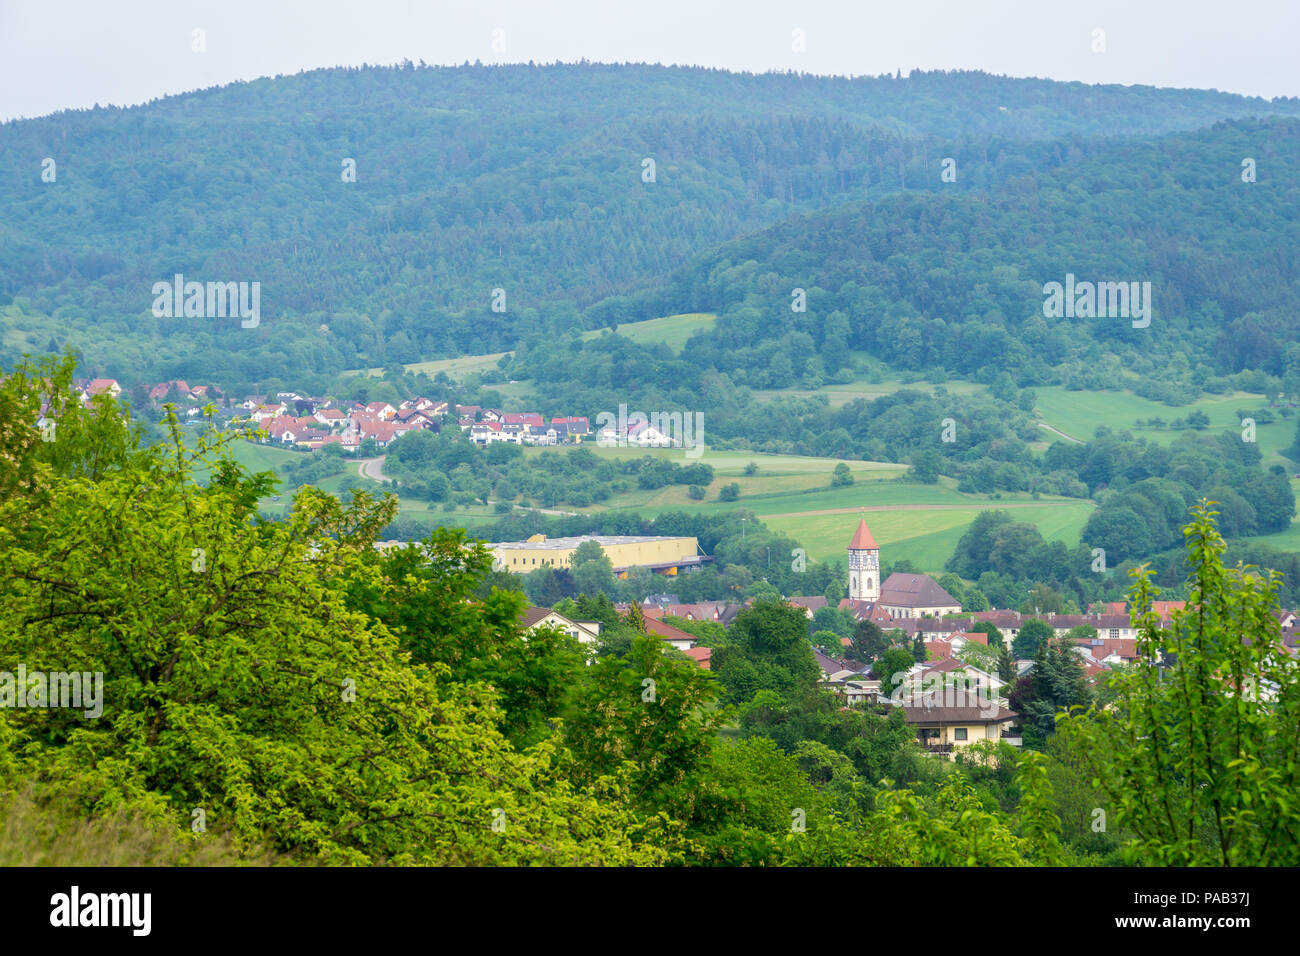 Germany, Little swabian village Rudersberg surrounded by green forest Stock Photo